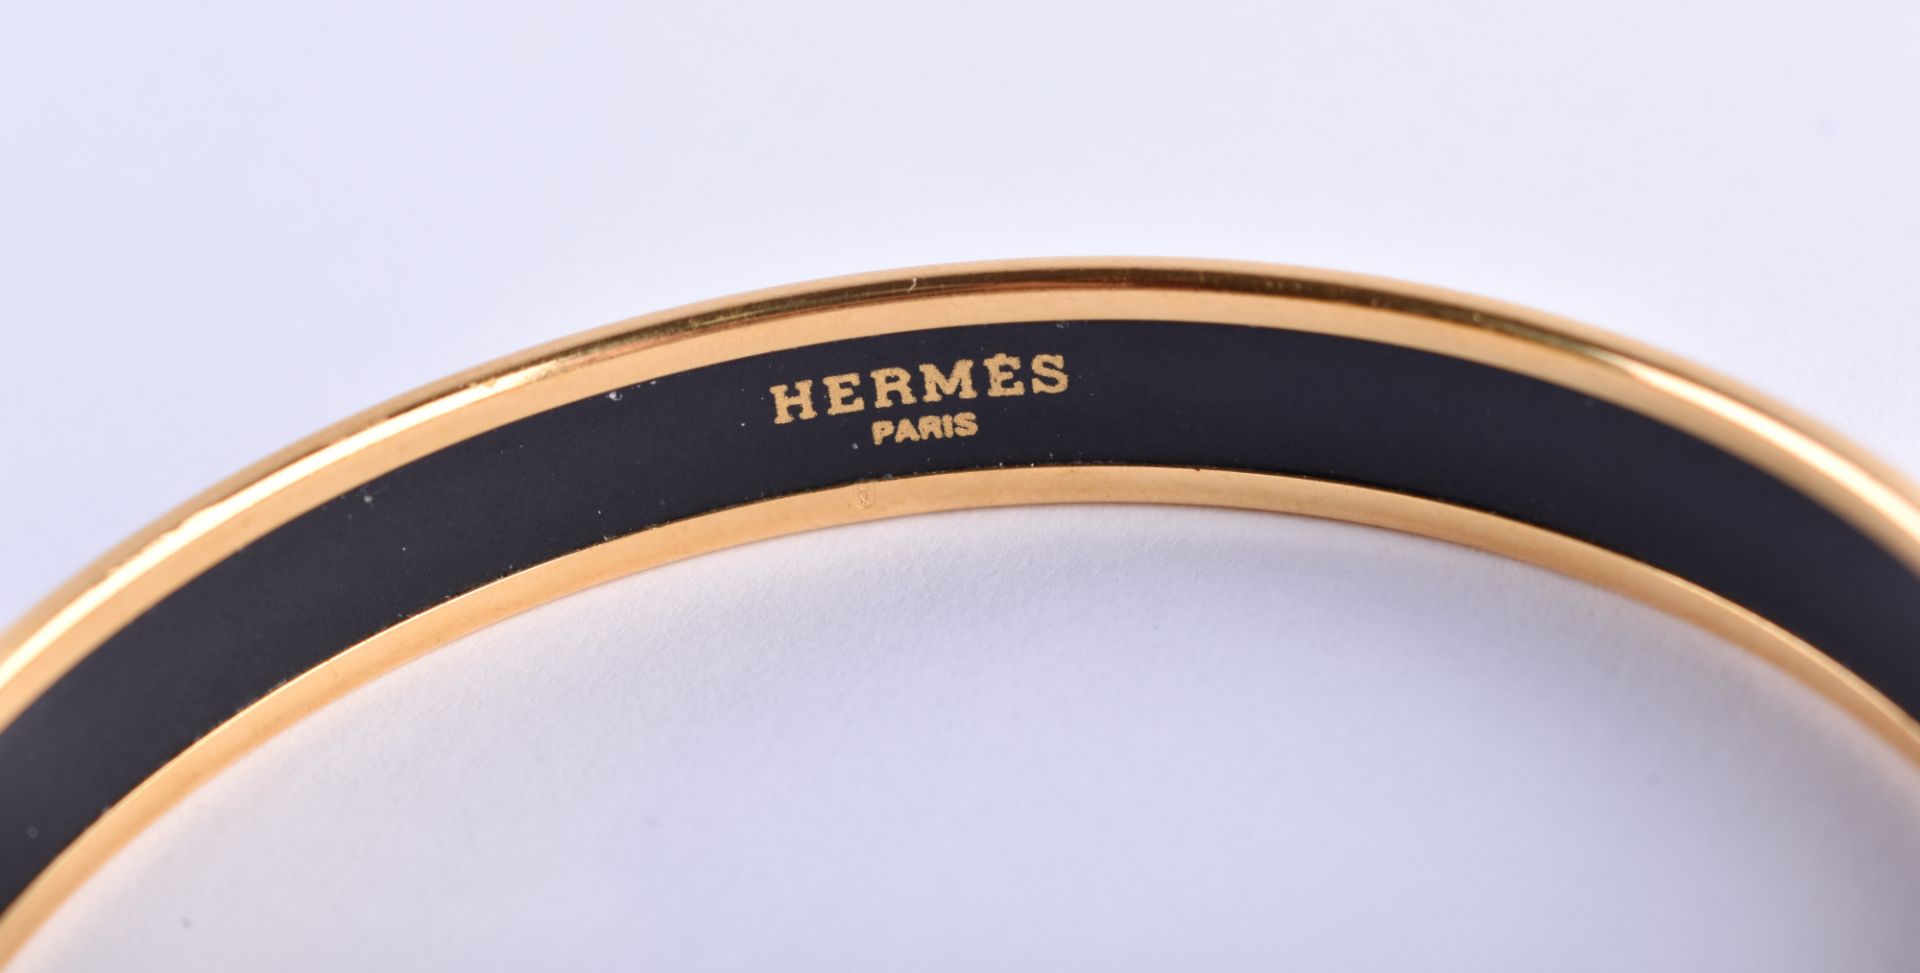  Vintage enamel bangle Hermes Paris - Image 4 of 4